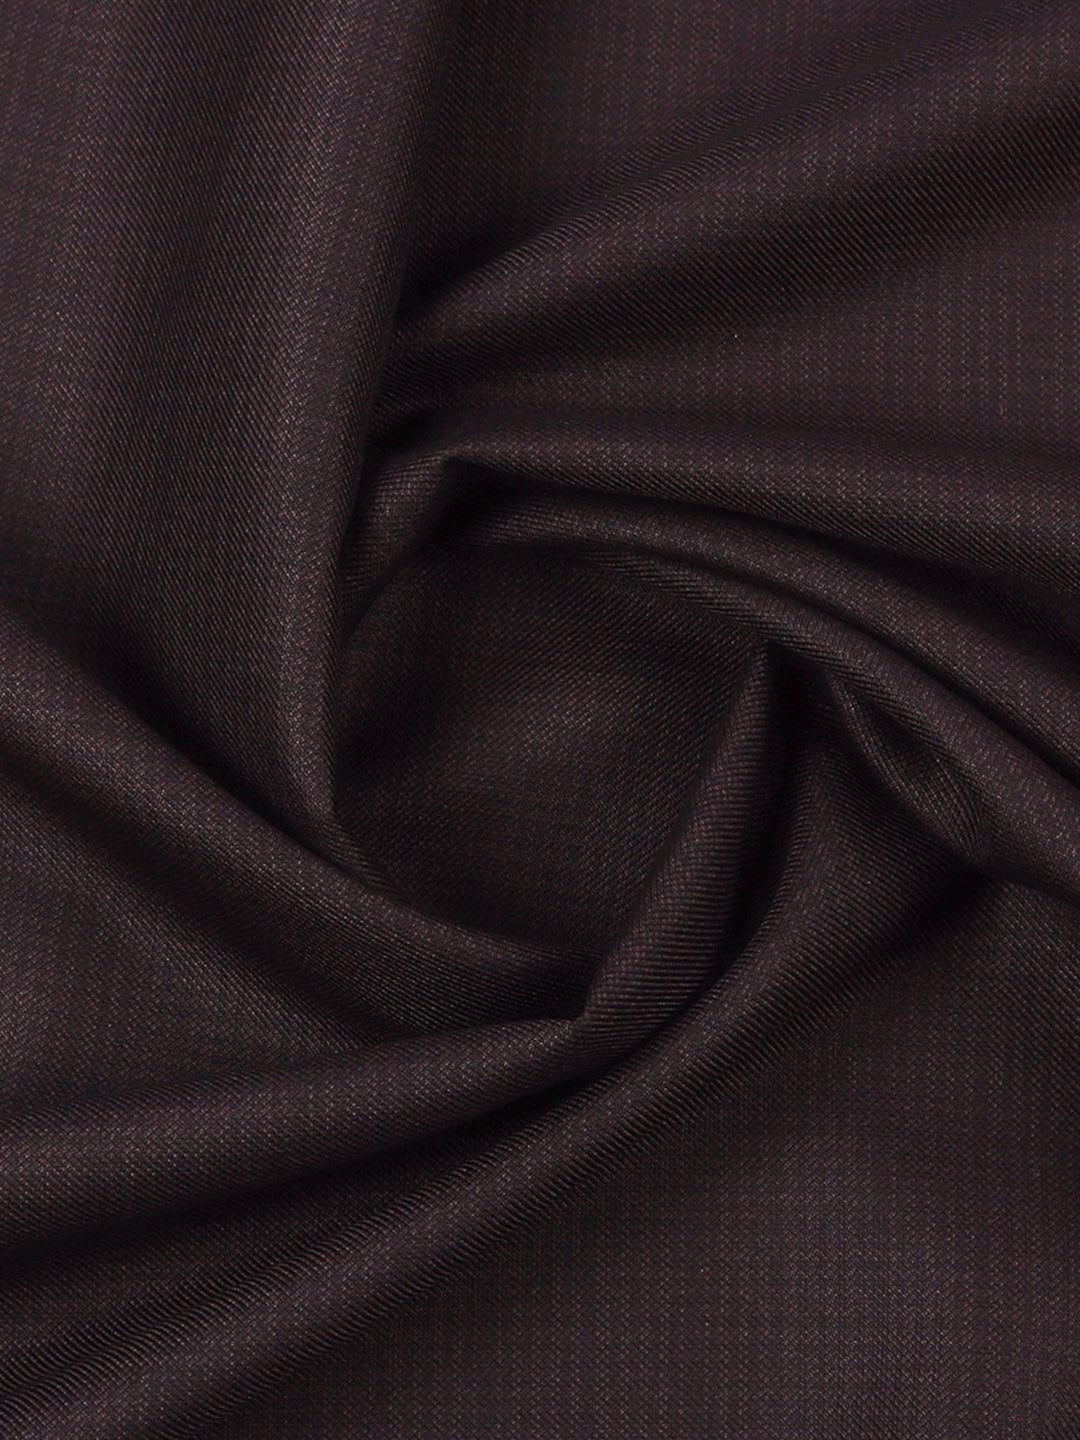 Cotton Blended Dark Brown Premium Suiting Fabric-Golden Days